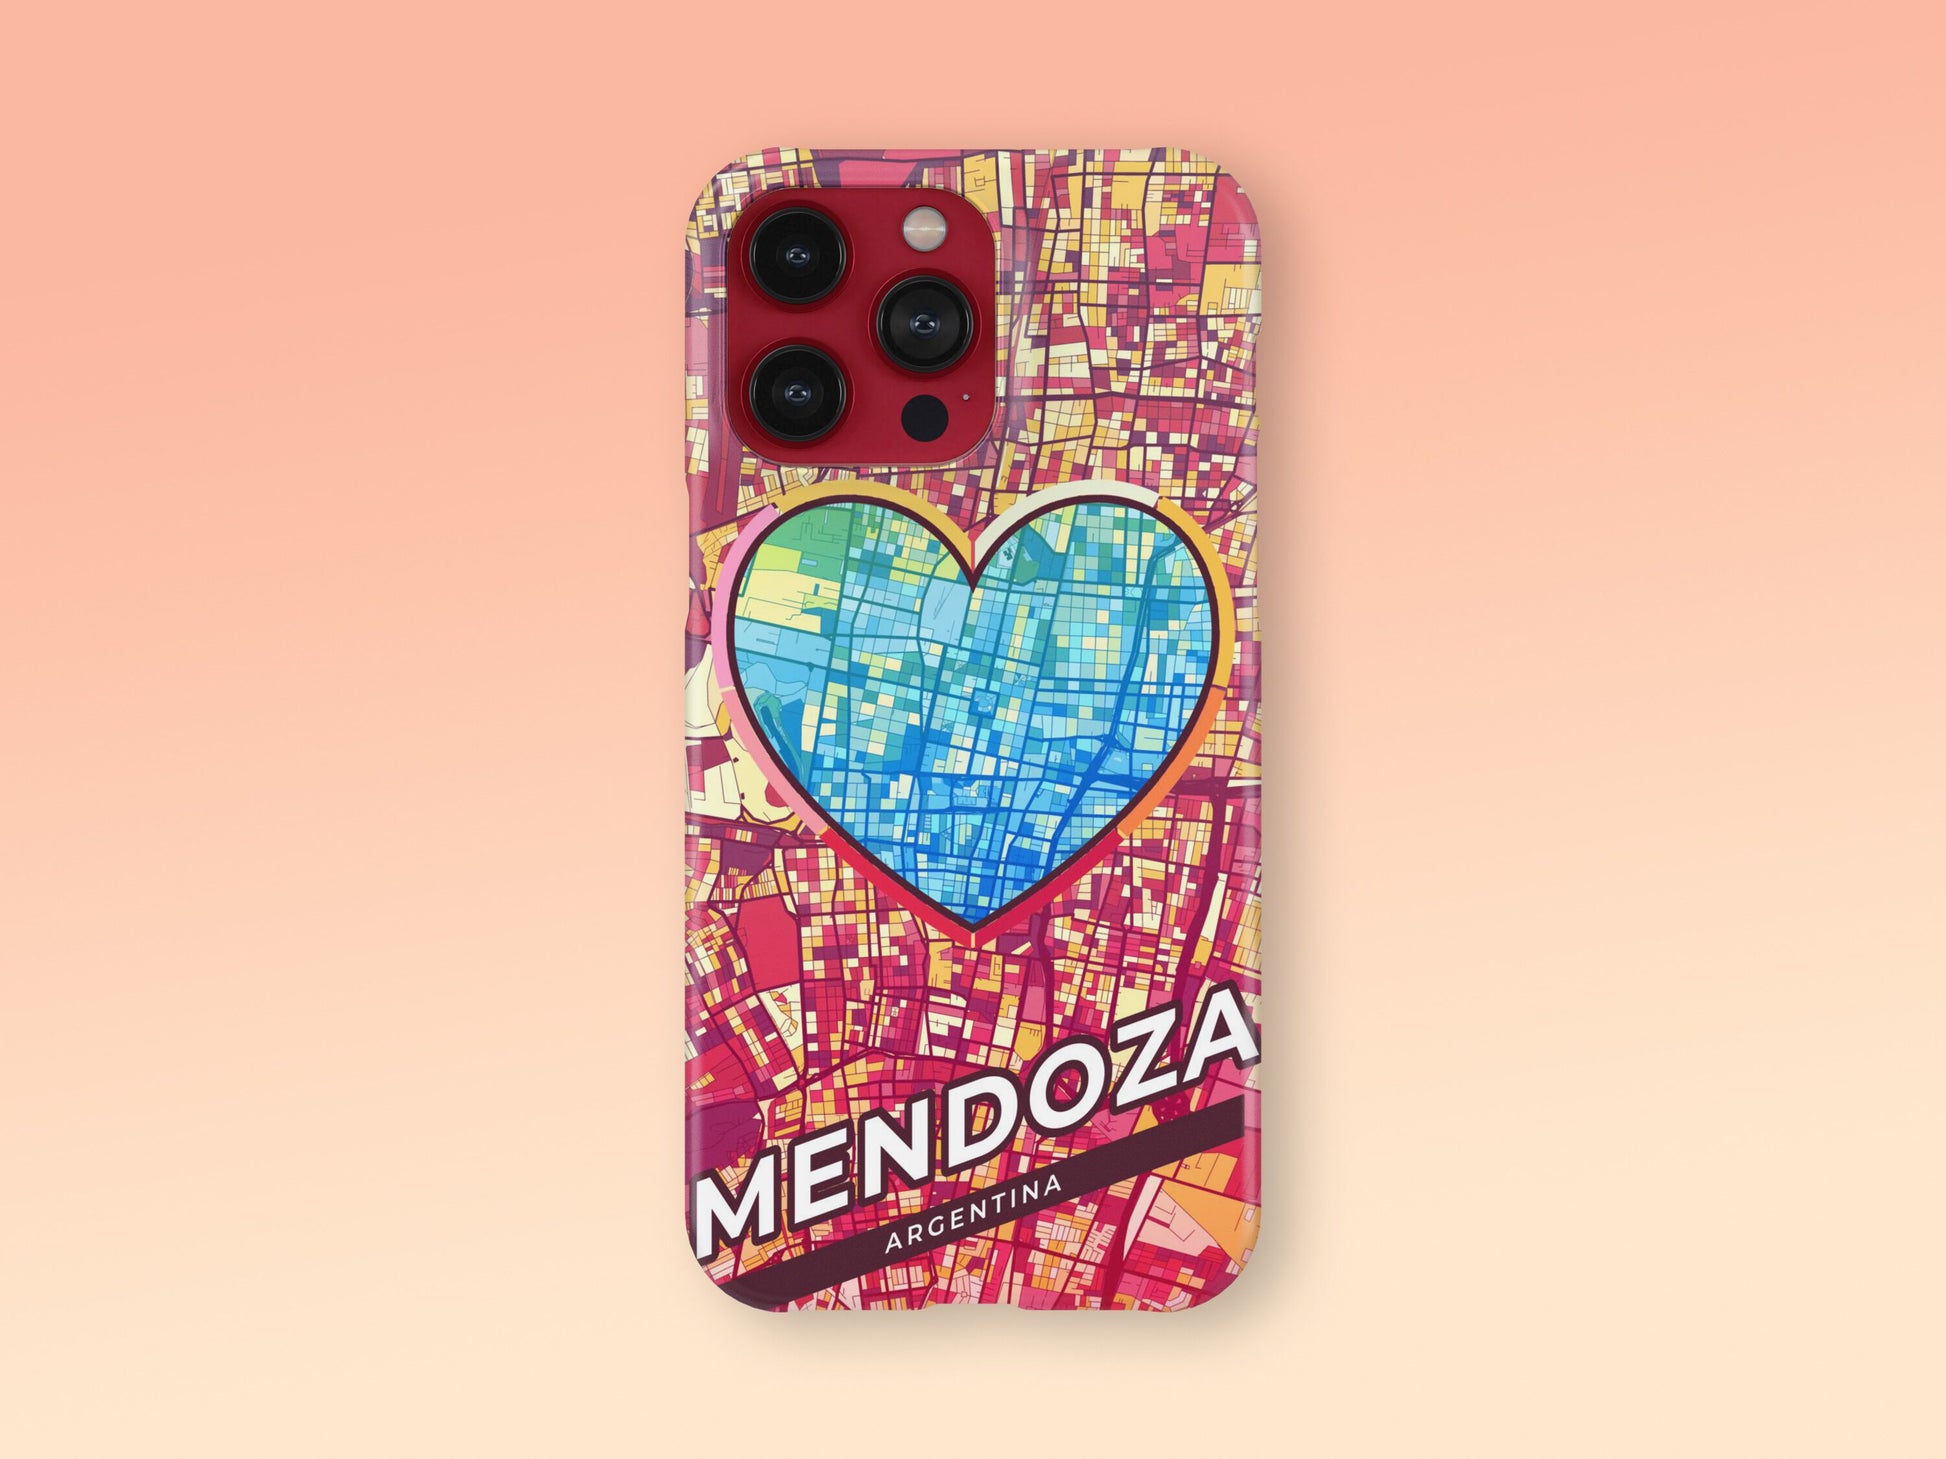 Mendoza Argentina slim phone case with colorful icon 2